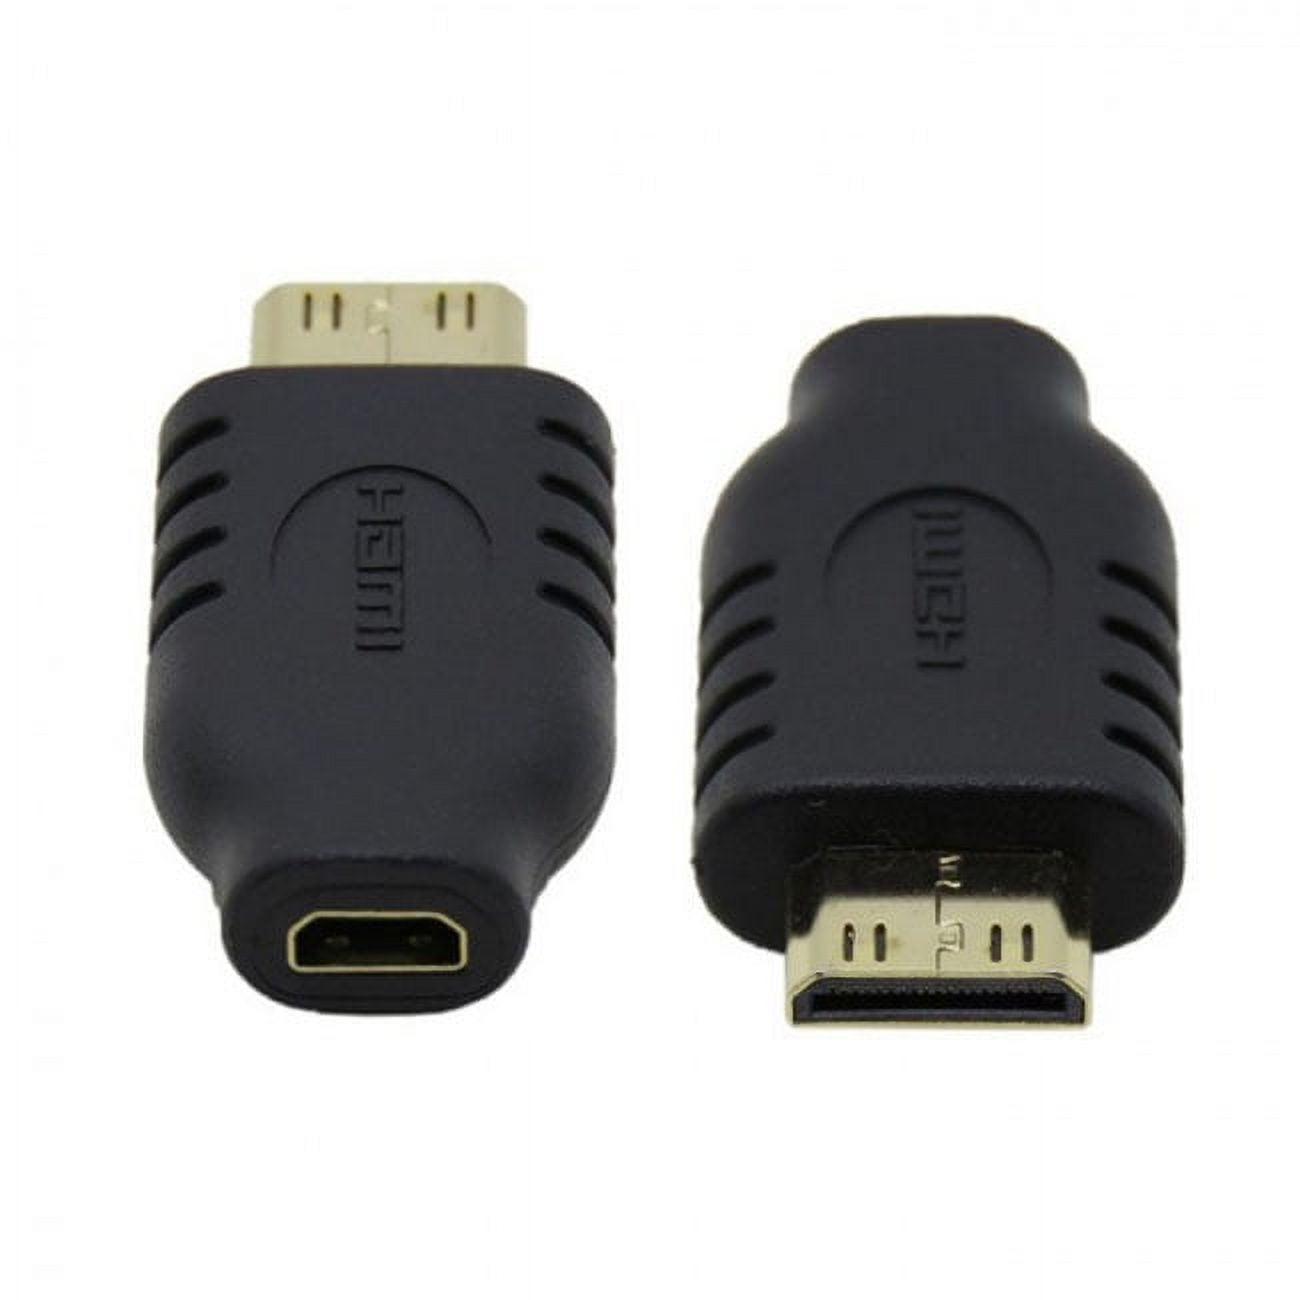 USB-C SINGLE VIDEO ADAPTER WITH 4K HDMI/DVI/VGA ACA961USZ